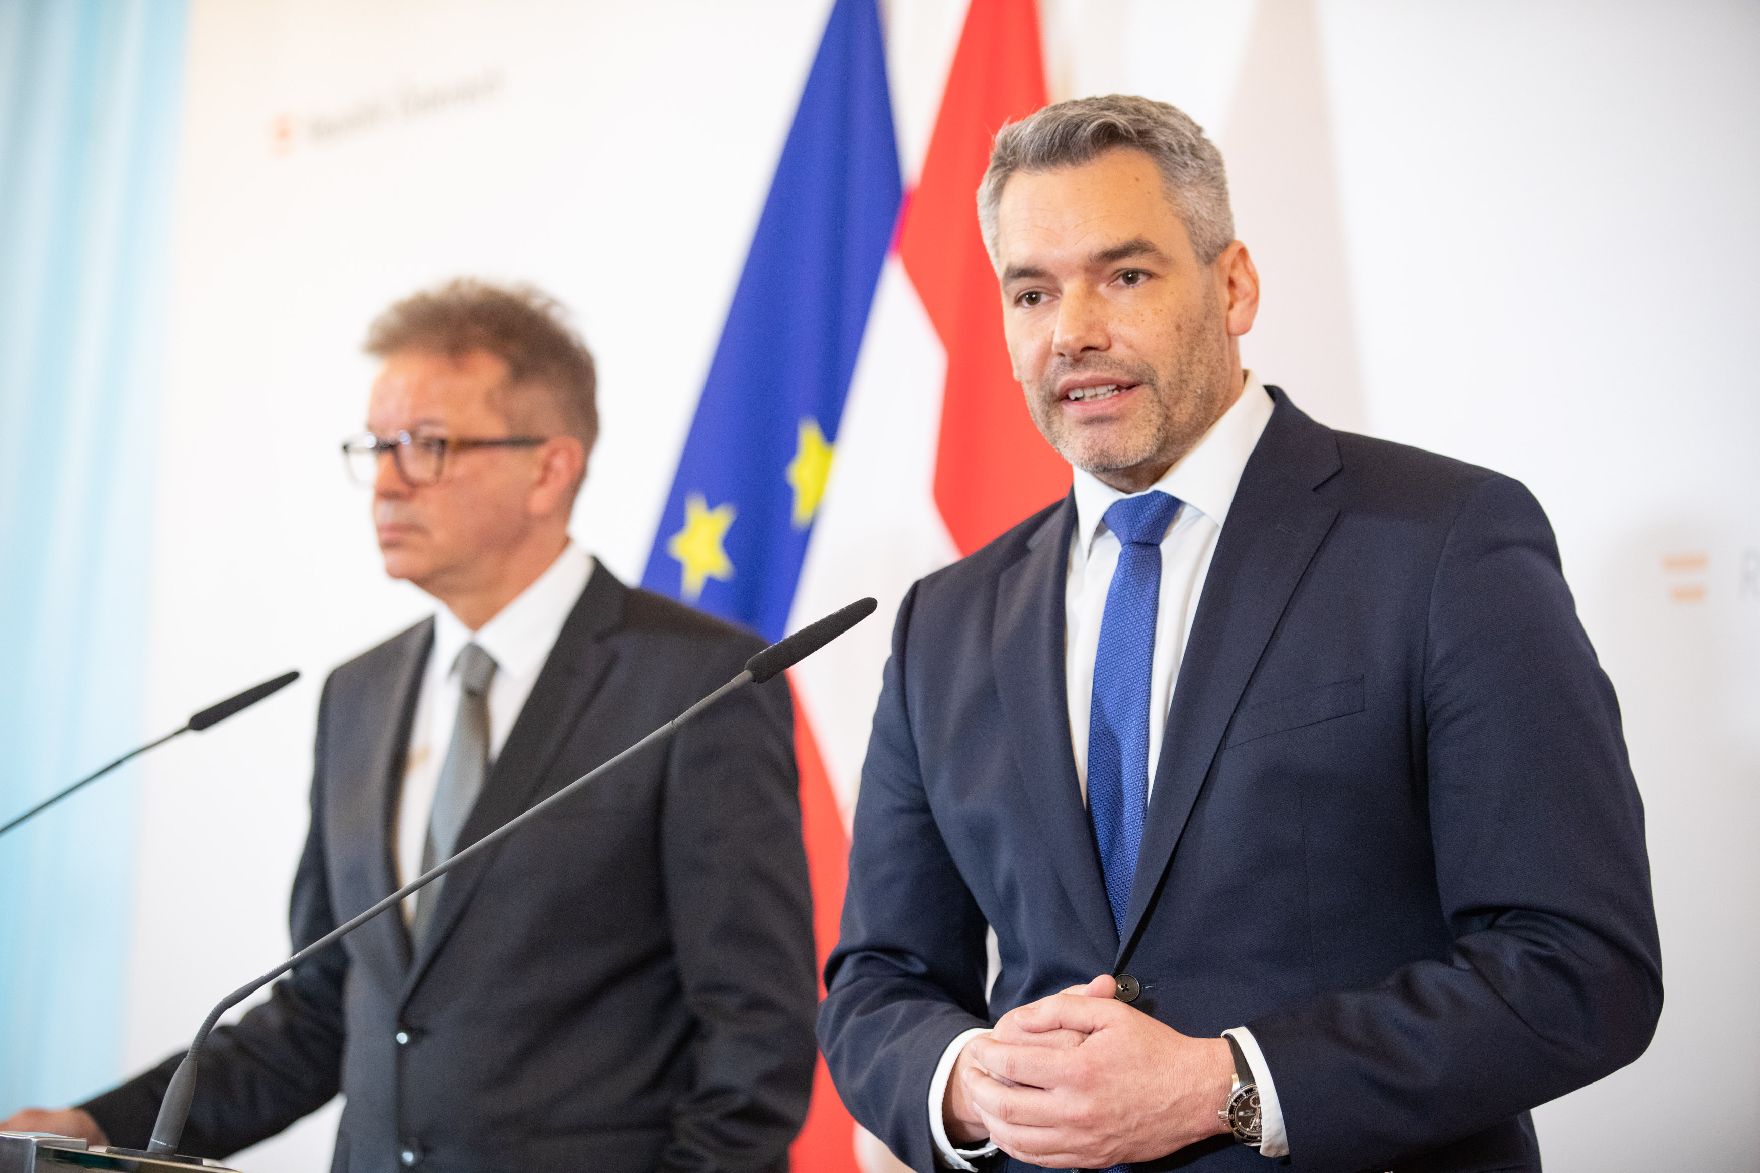 Bundesminister Rudolf Anschober (l.) und Bundesminister Karl Nehammer (r.) beim Pressefoyer nach dem Ministerrat am 15. Jänner 2020.